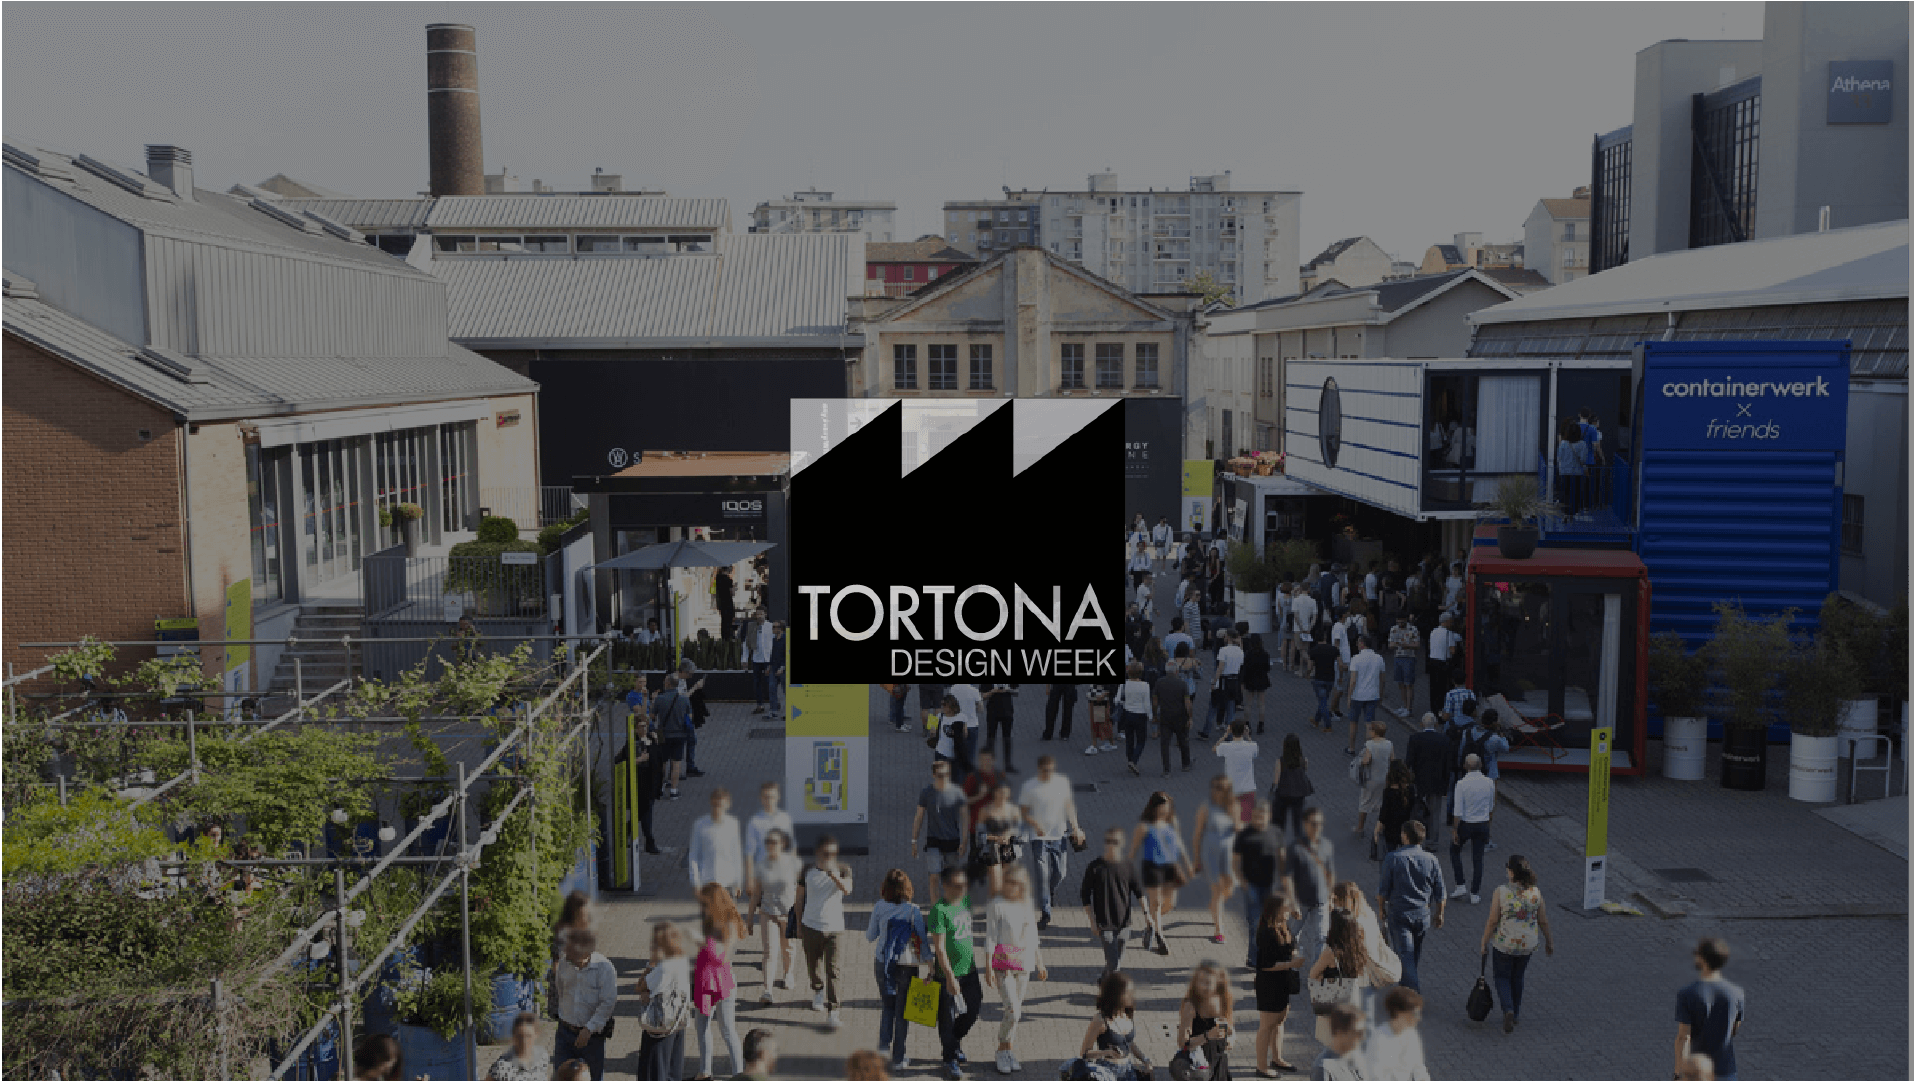 Tortona Design Week - Featured image